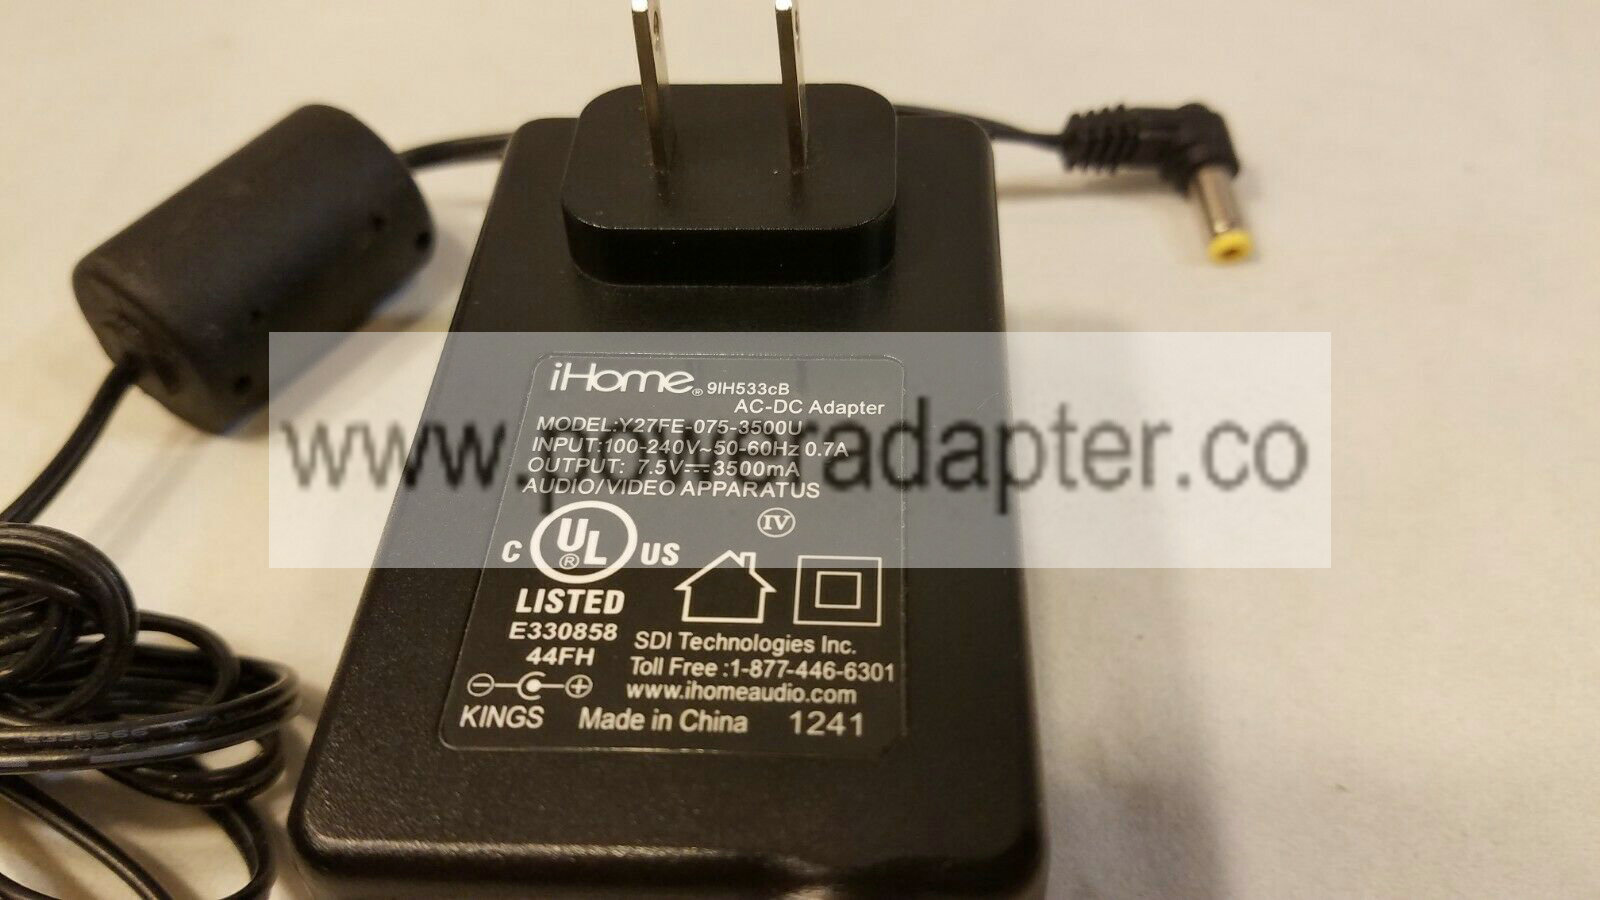 iHome Y27FE-075-3500U AC Power Supply Adapter Charger 7.5V 3500mA TESTED WORKING Bundle Listing: No MPN: 9IH508cB Mod